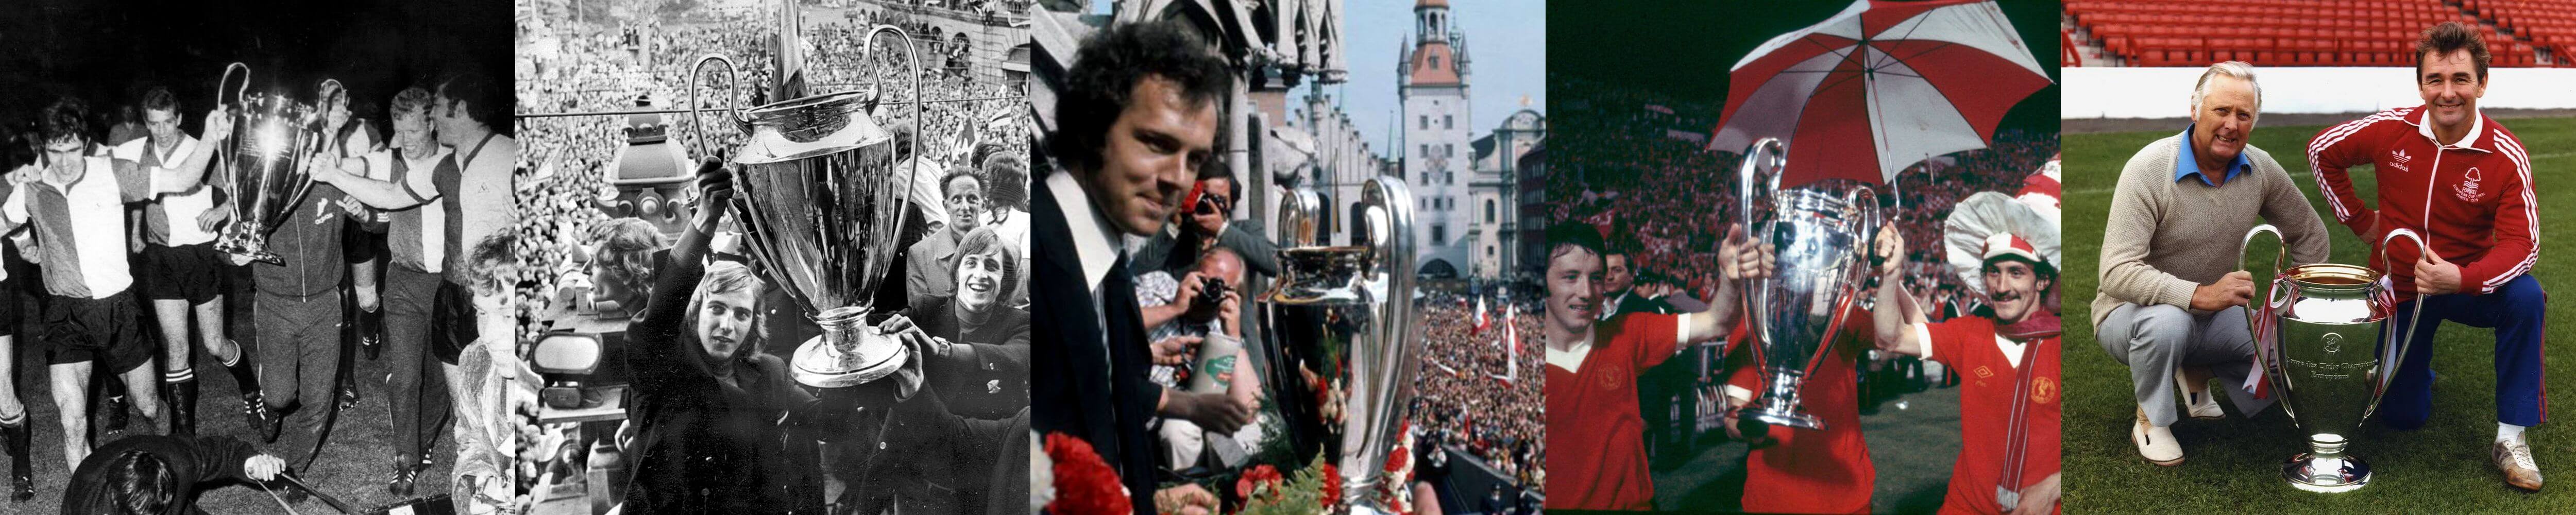 Champions League winners 1970s